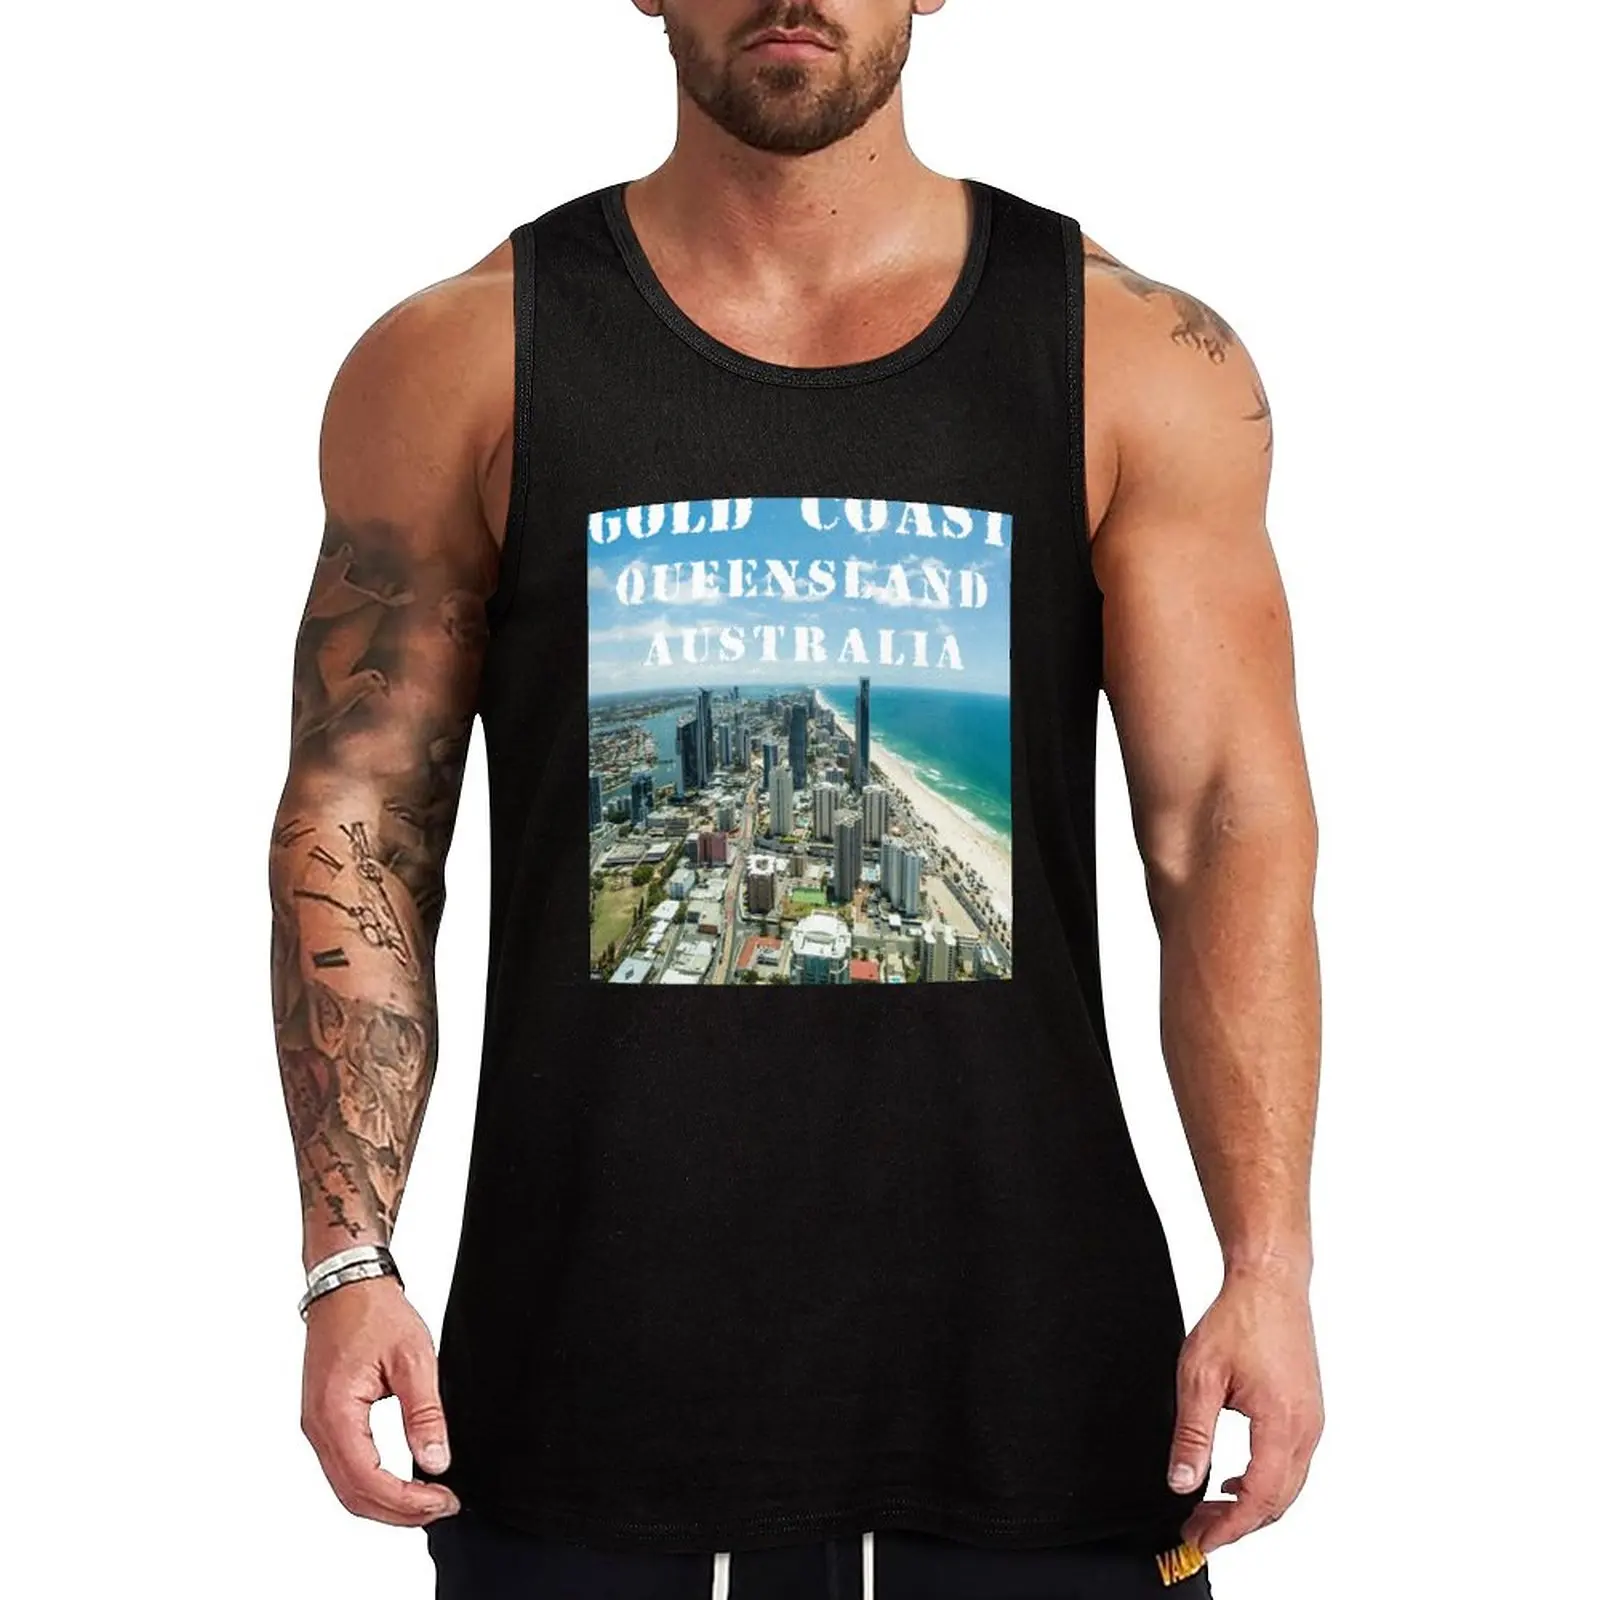 

New Gold Coast, Australia – Skyline - Seaside Resort - Beaches Tank Top Vests Bodybuilding clothing man